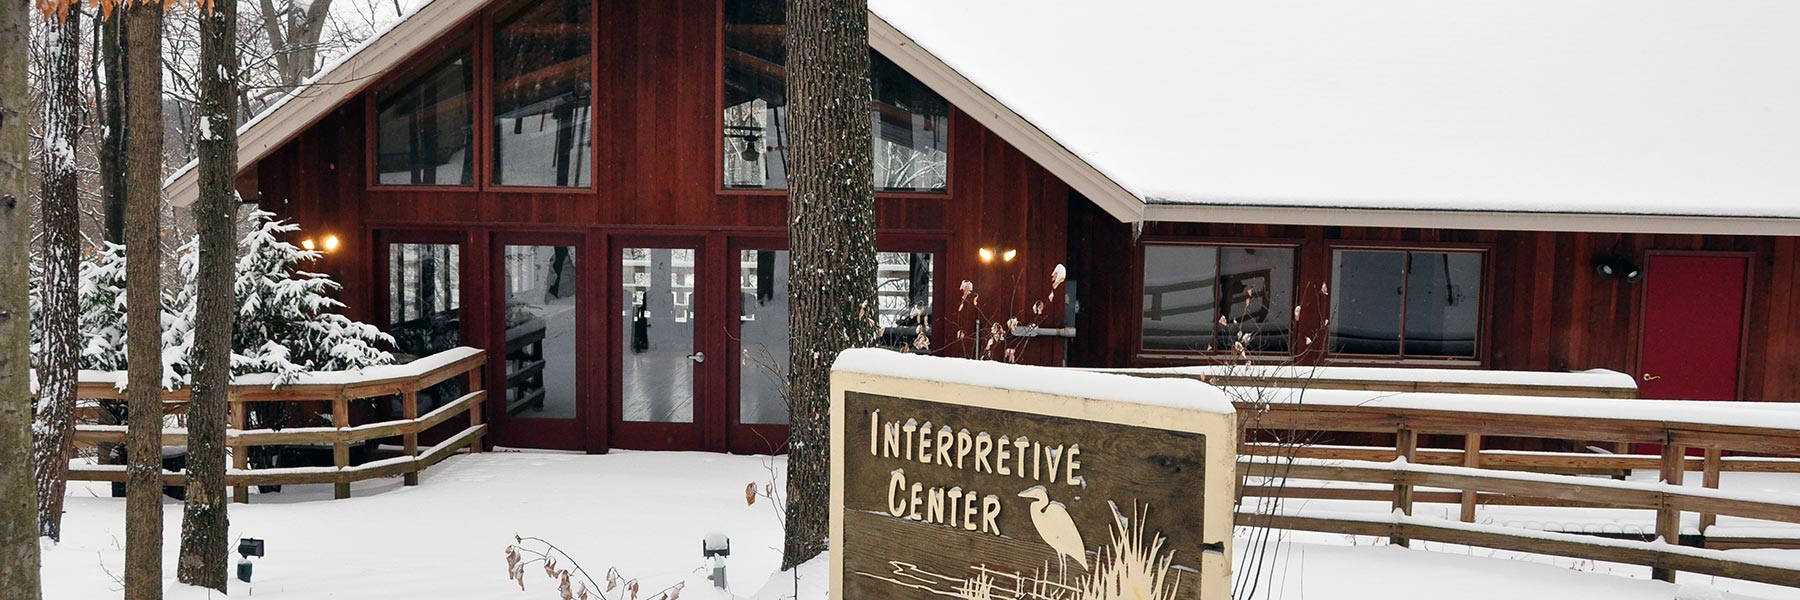 Interpretive Center exterior in winter